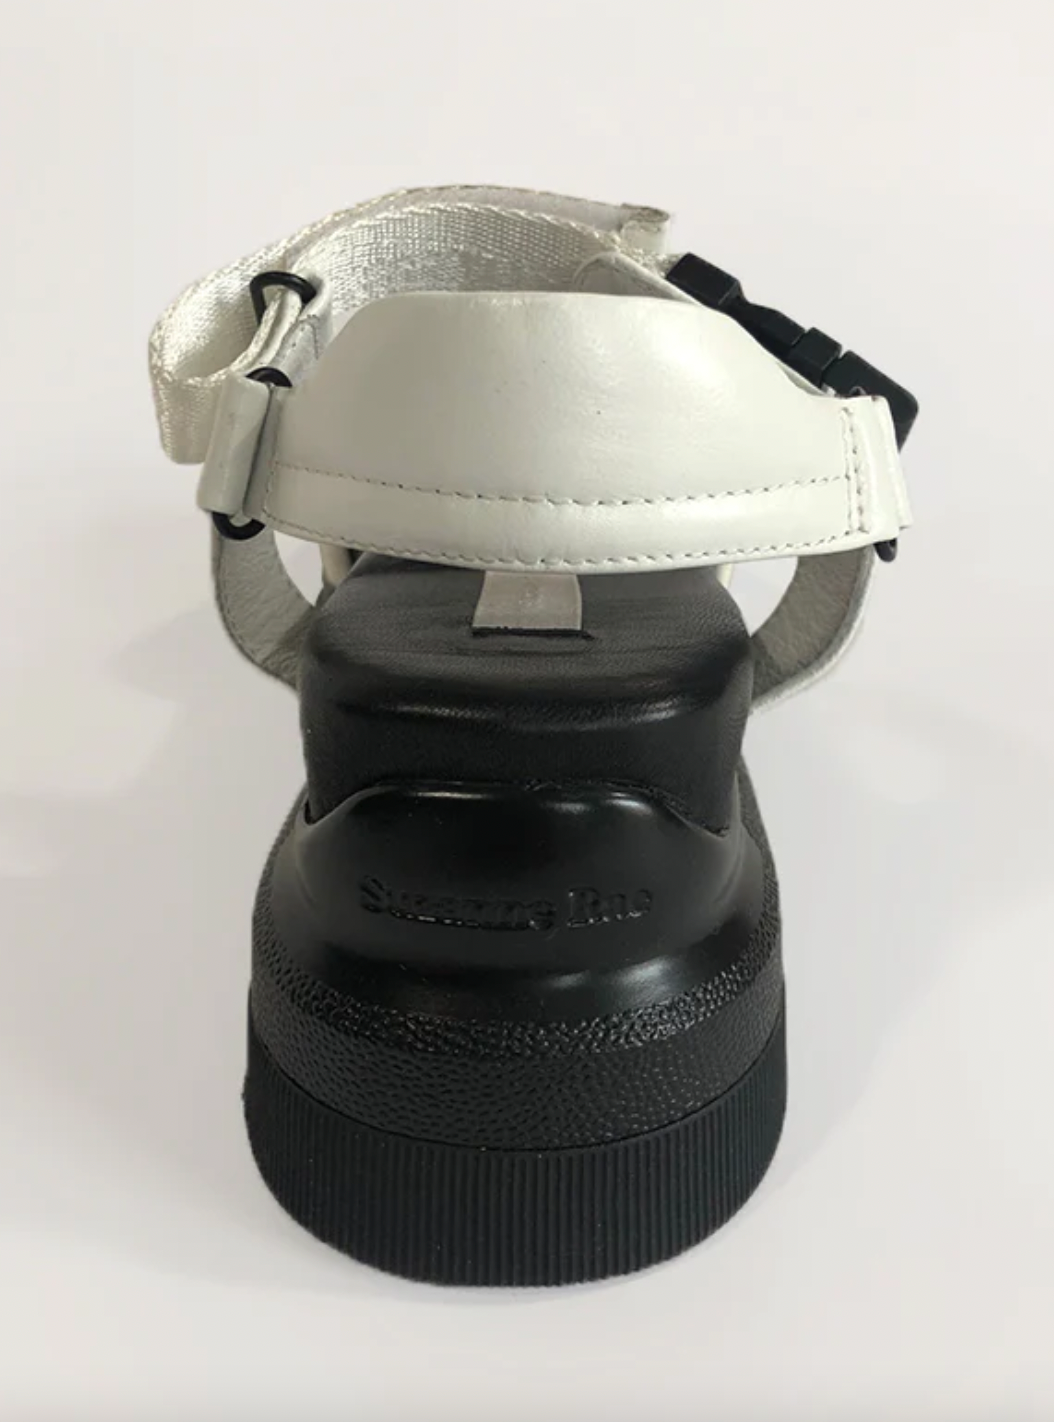 Product Image for Buckle Velcro Sandal, White/Black